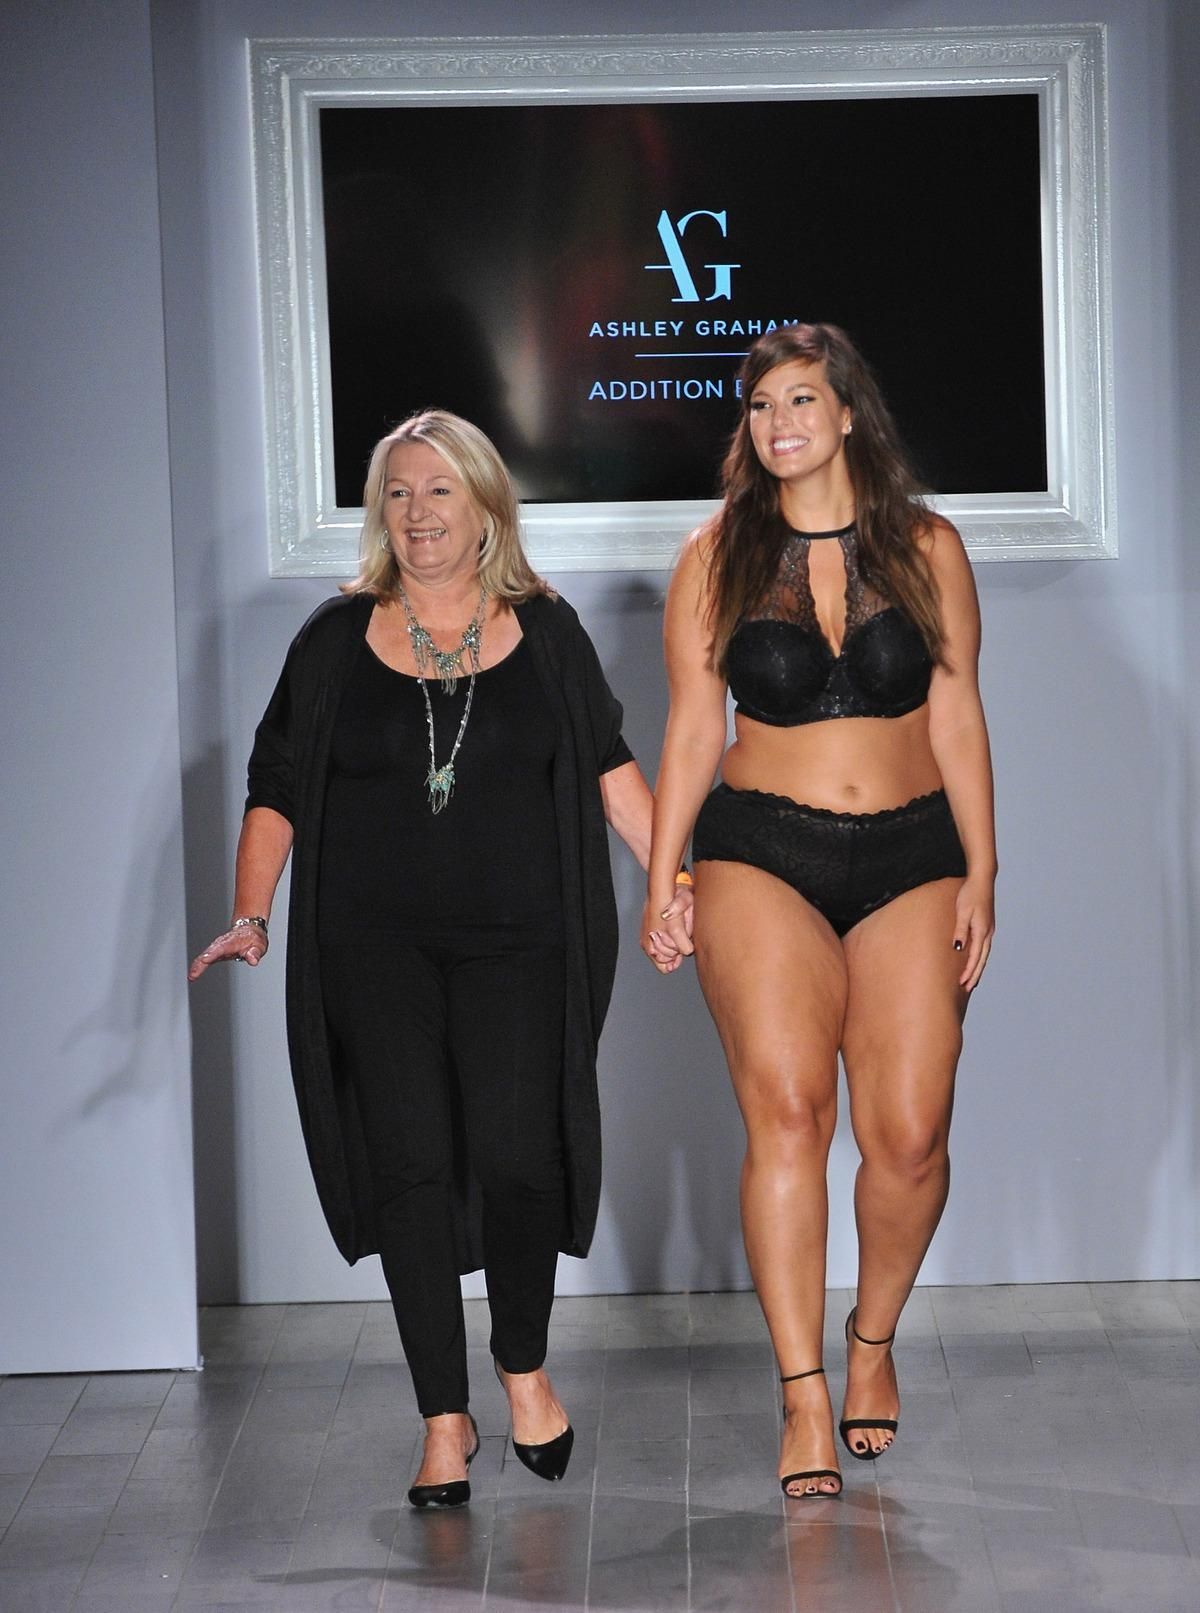 Plus-size lingerie fashion show proves inclusiveness is sexy